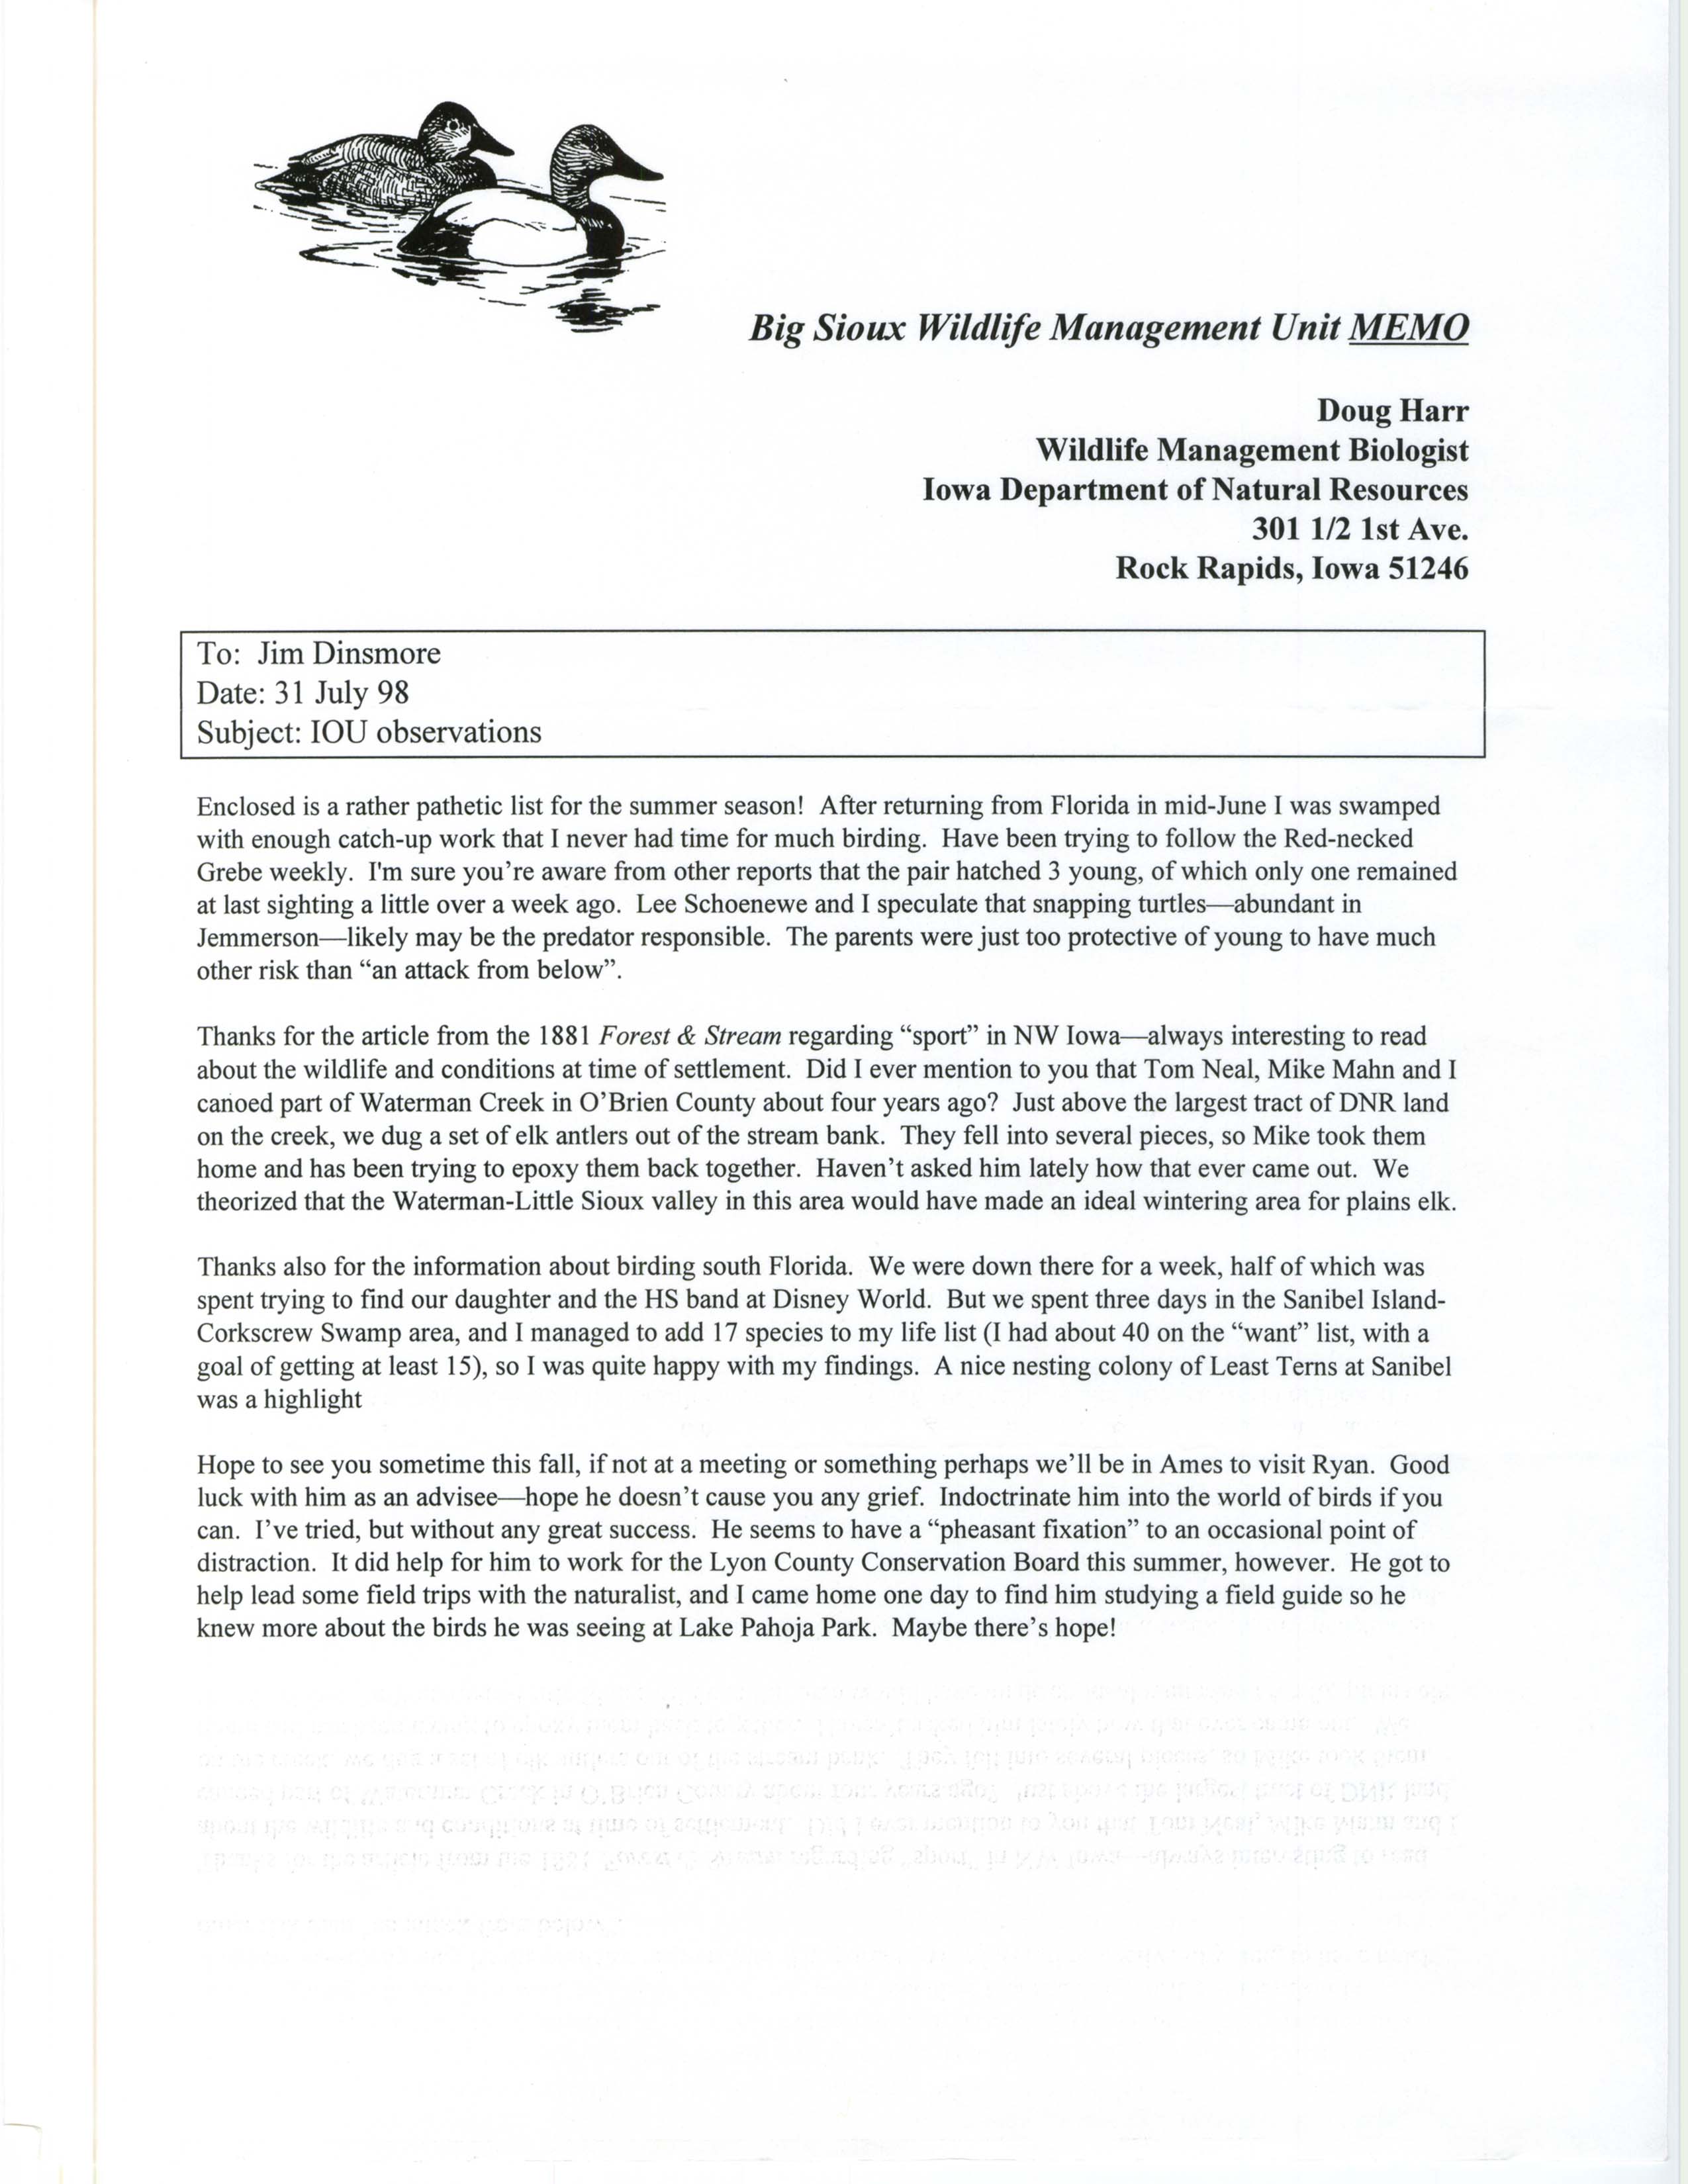 Doug Harr letter to Jim Dinsmore regarding IOU observations, July 31, 1998